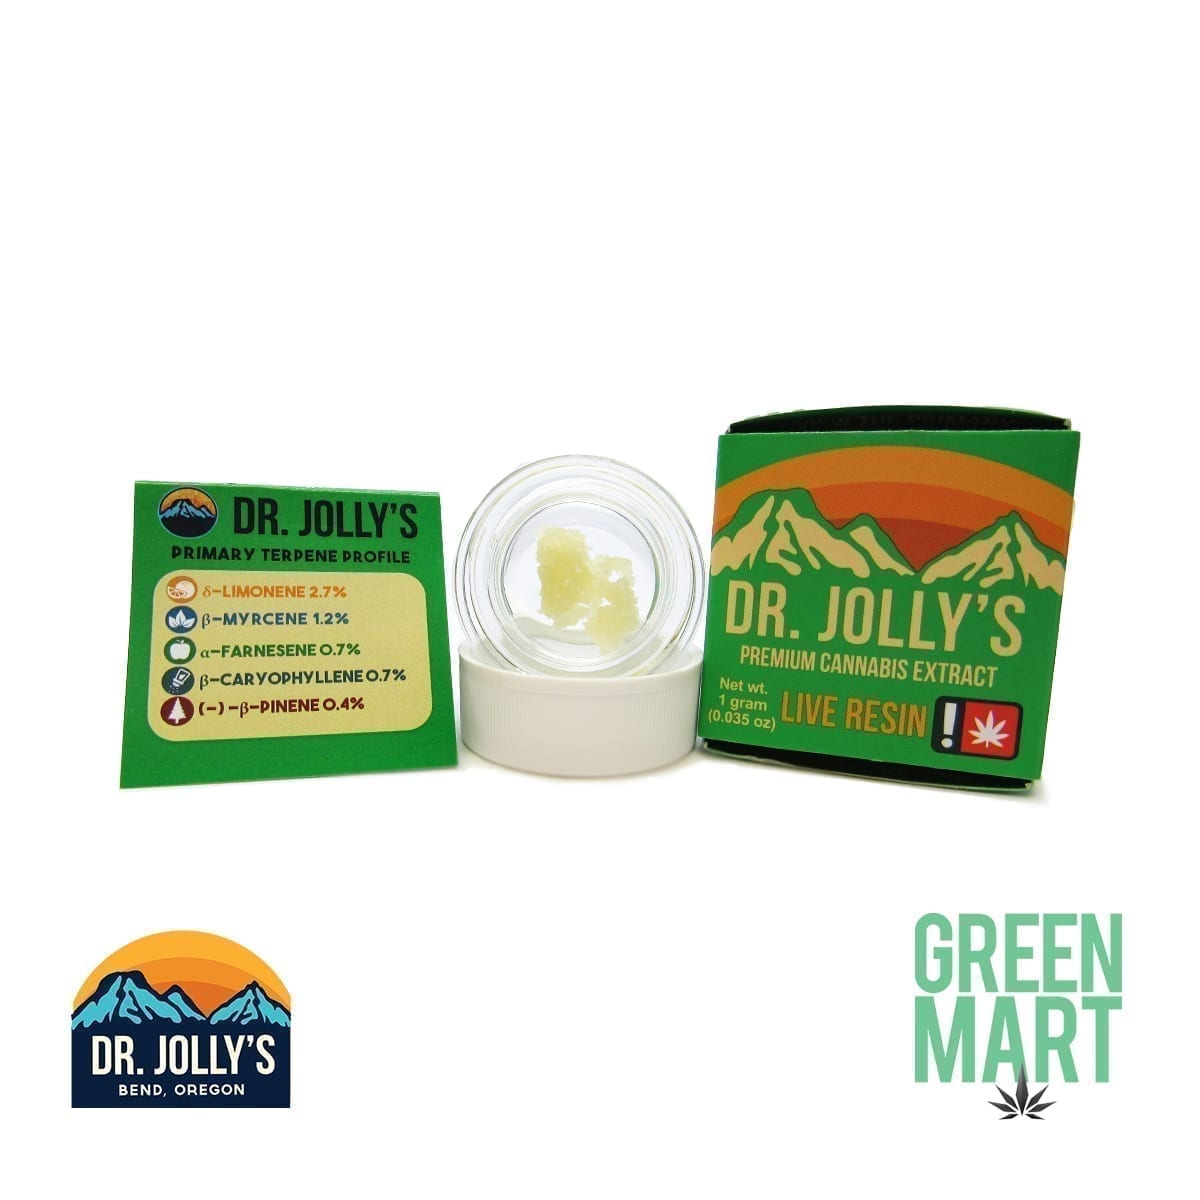 Dr. Jolly's Extracts - Orange Daiquiri